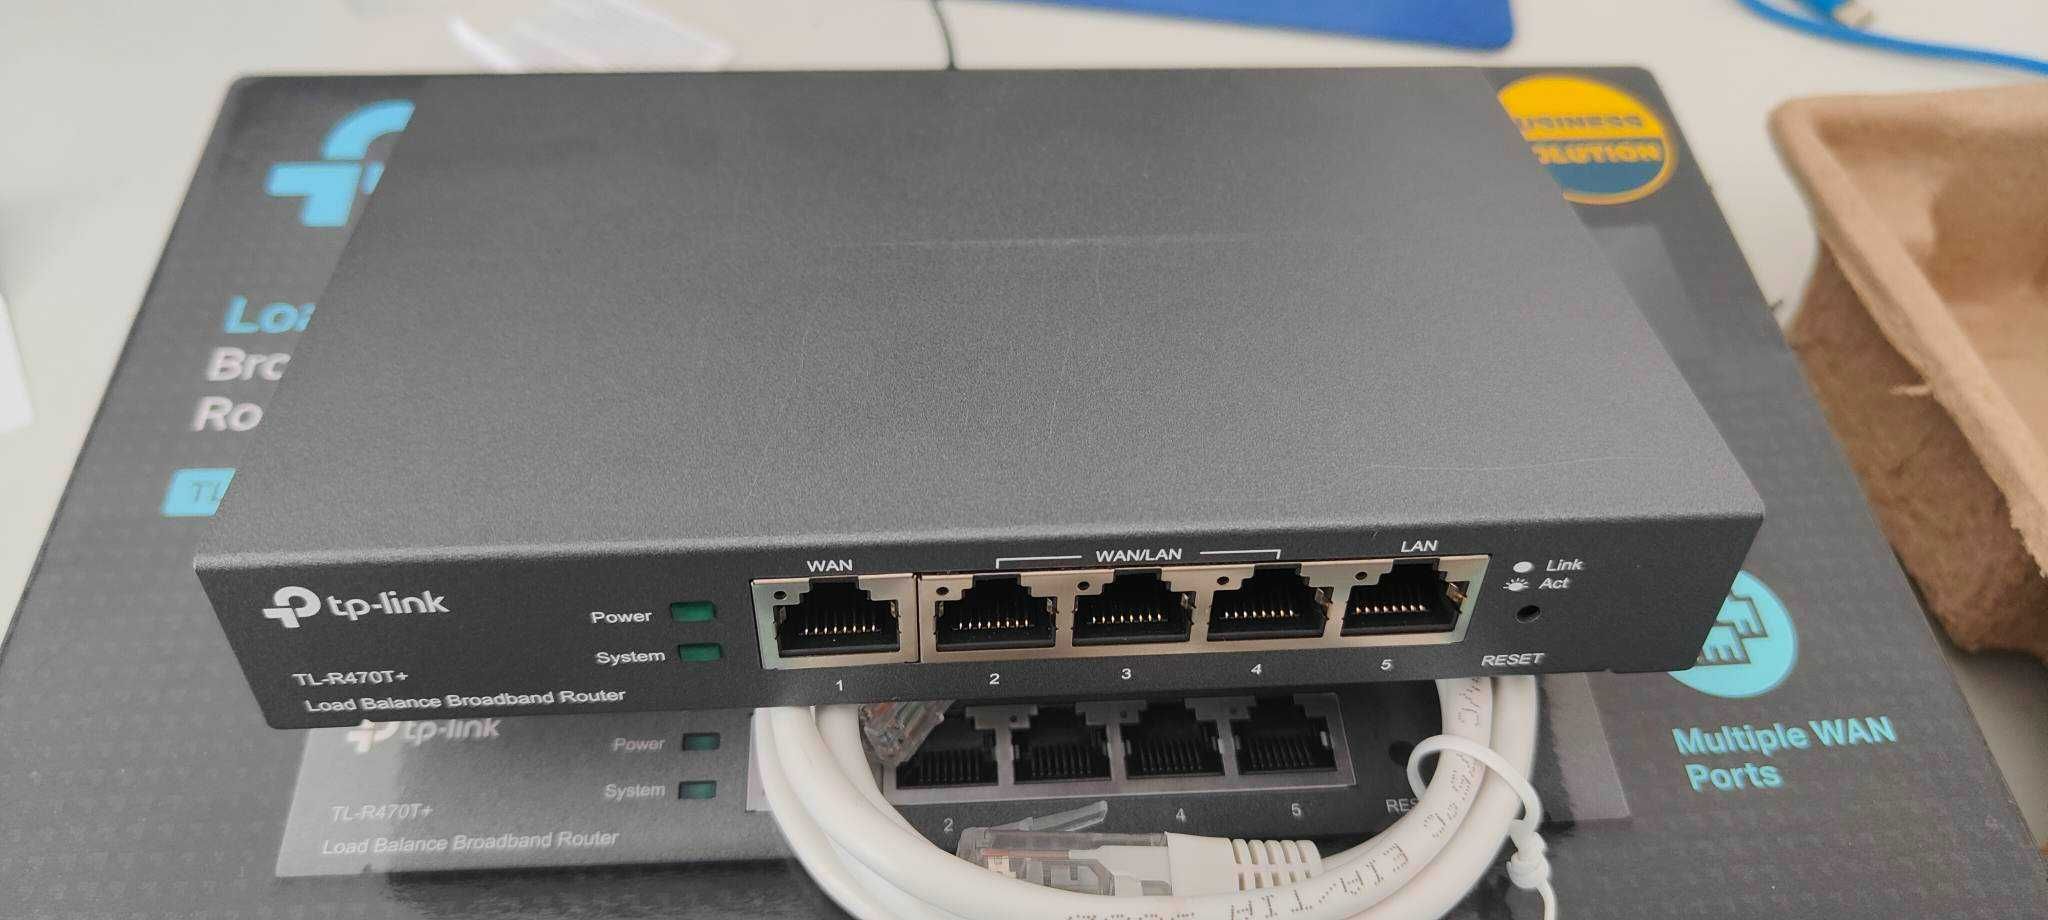 Router przewodowy TP-LINK TL-R470T+